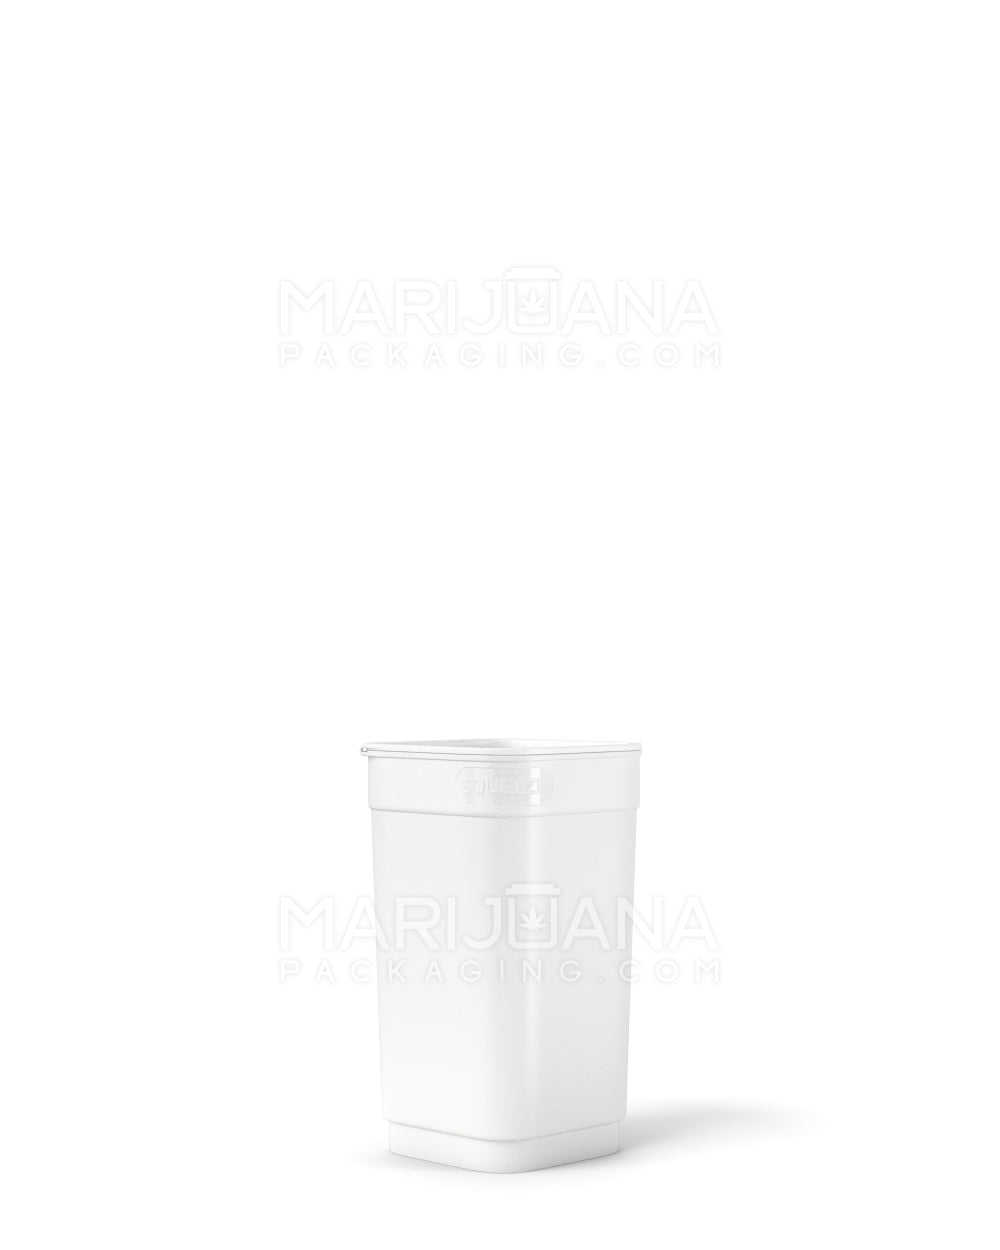 POLLEN GEAR | Child Resistant 100% Recyclable Opaque White Pop Box Pop Top Bottles | 13dr - 2g - 825 Count